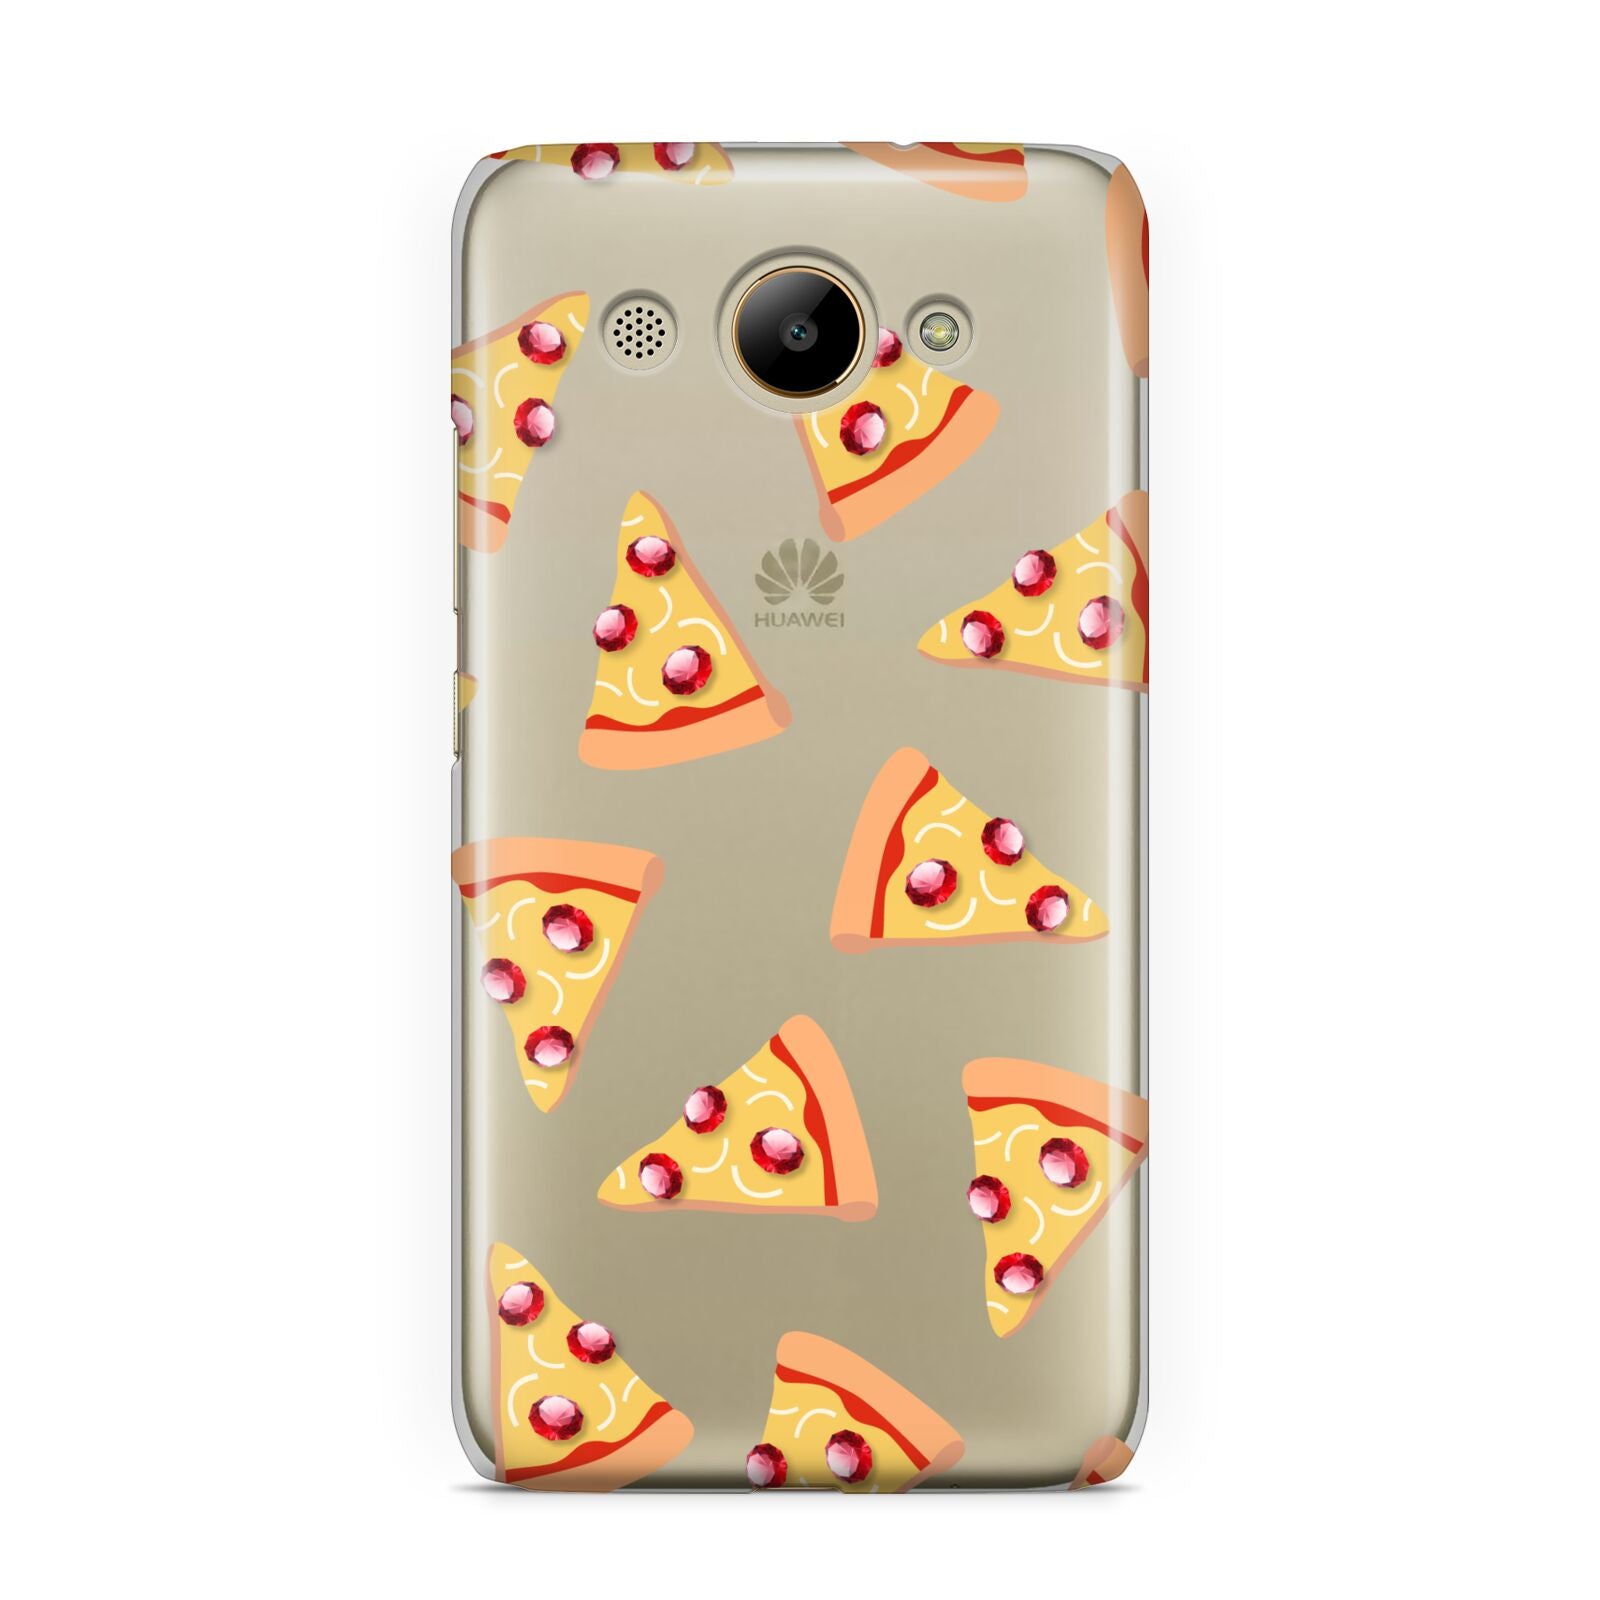 Rubies on Cartoon Pizza Slices Huawei Y3 2017